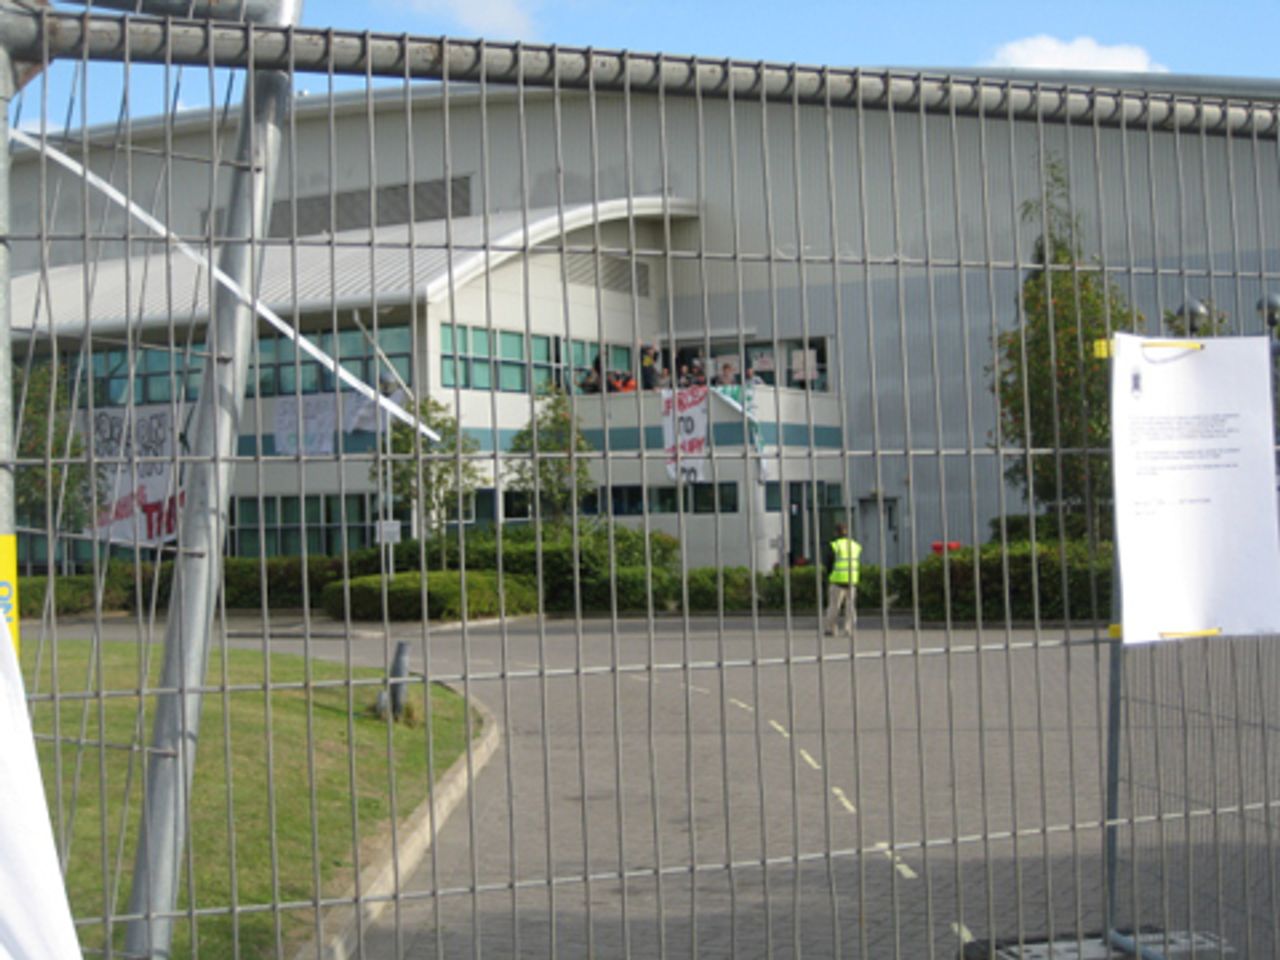 Fence surrounding Vestas factory